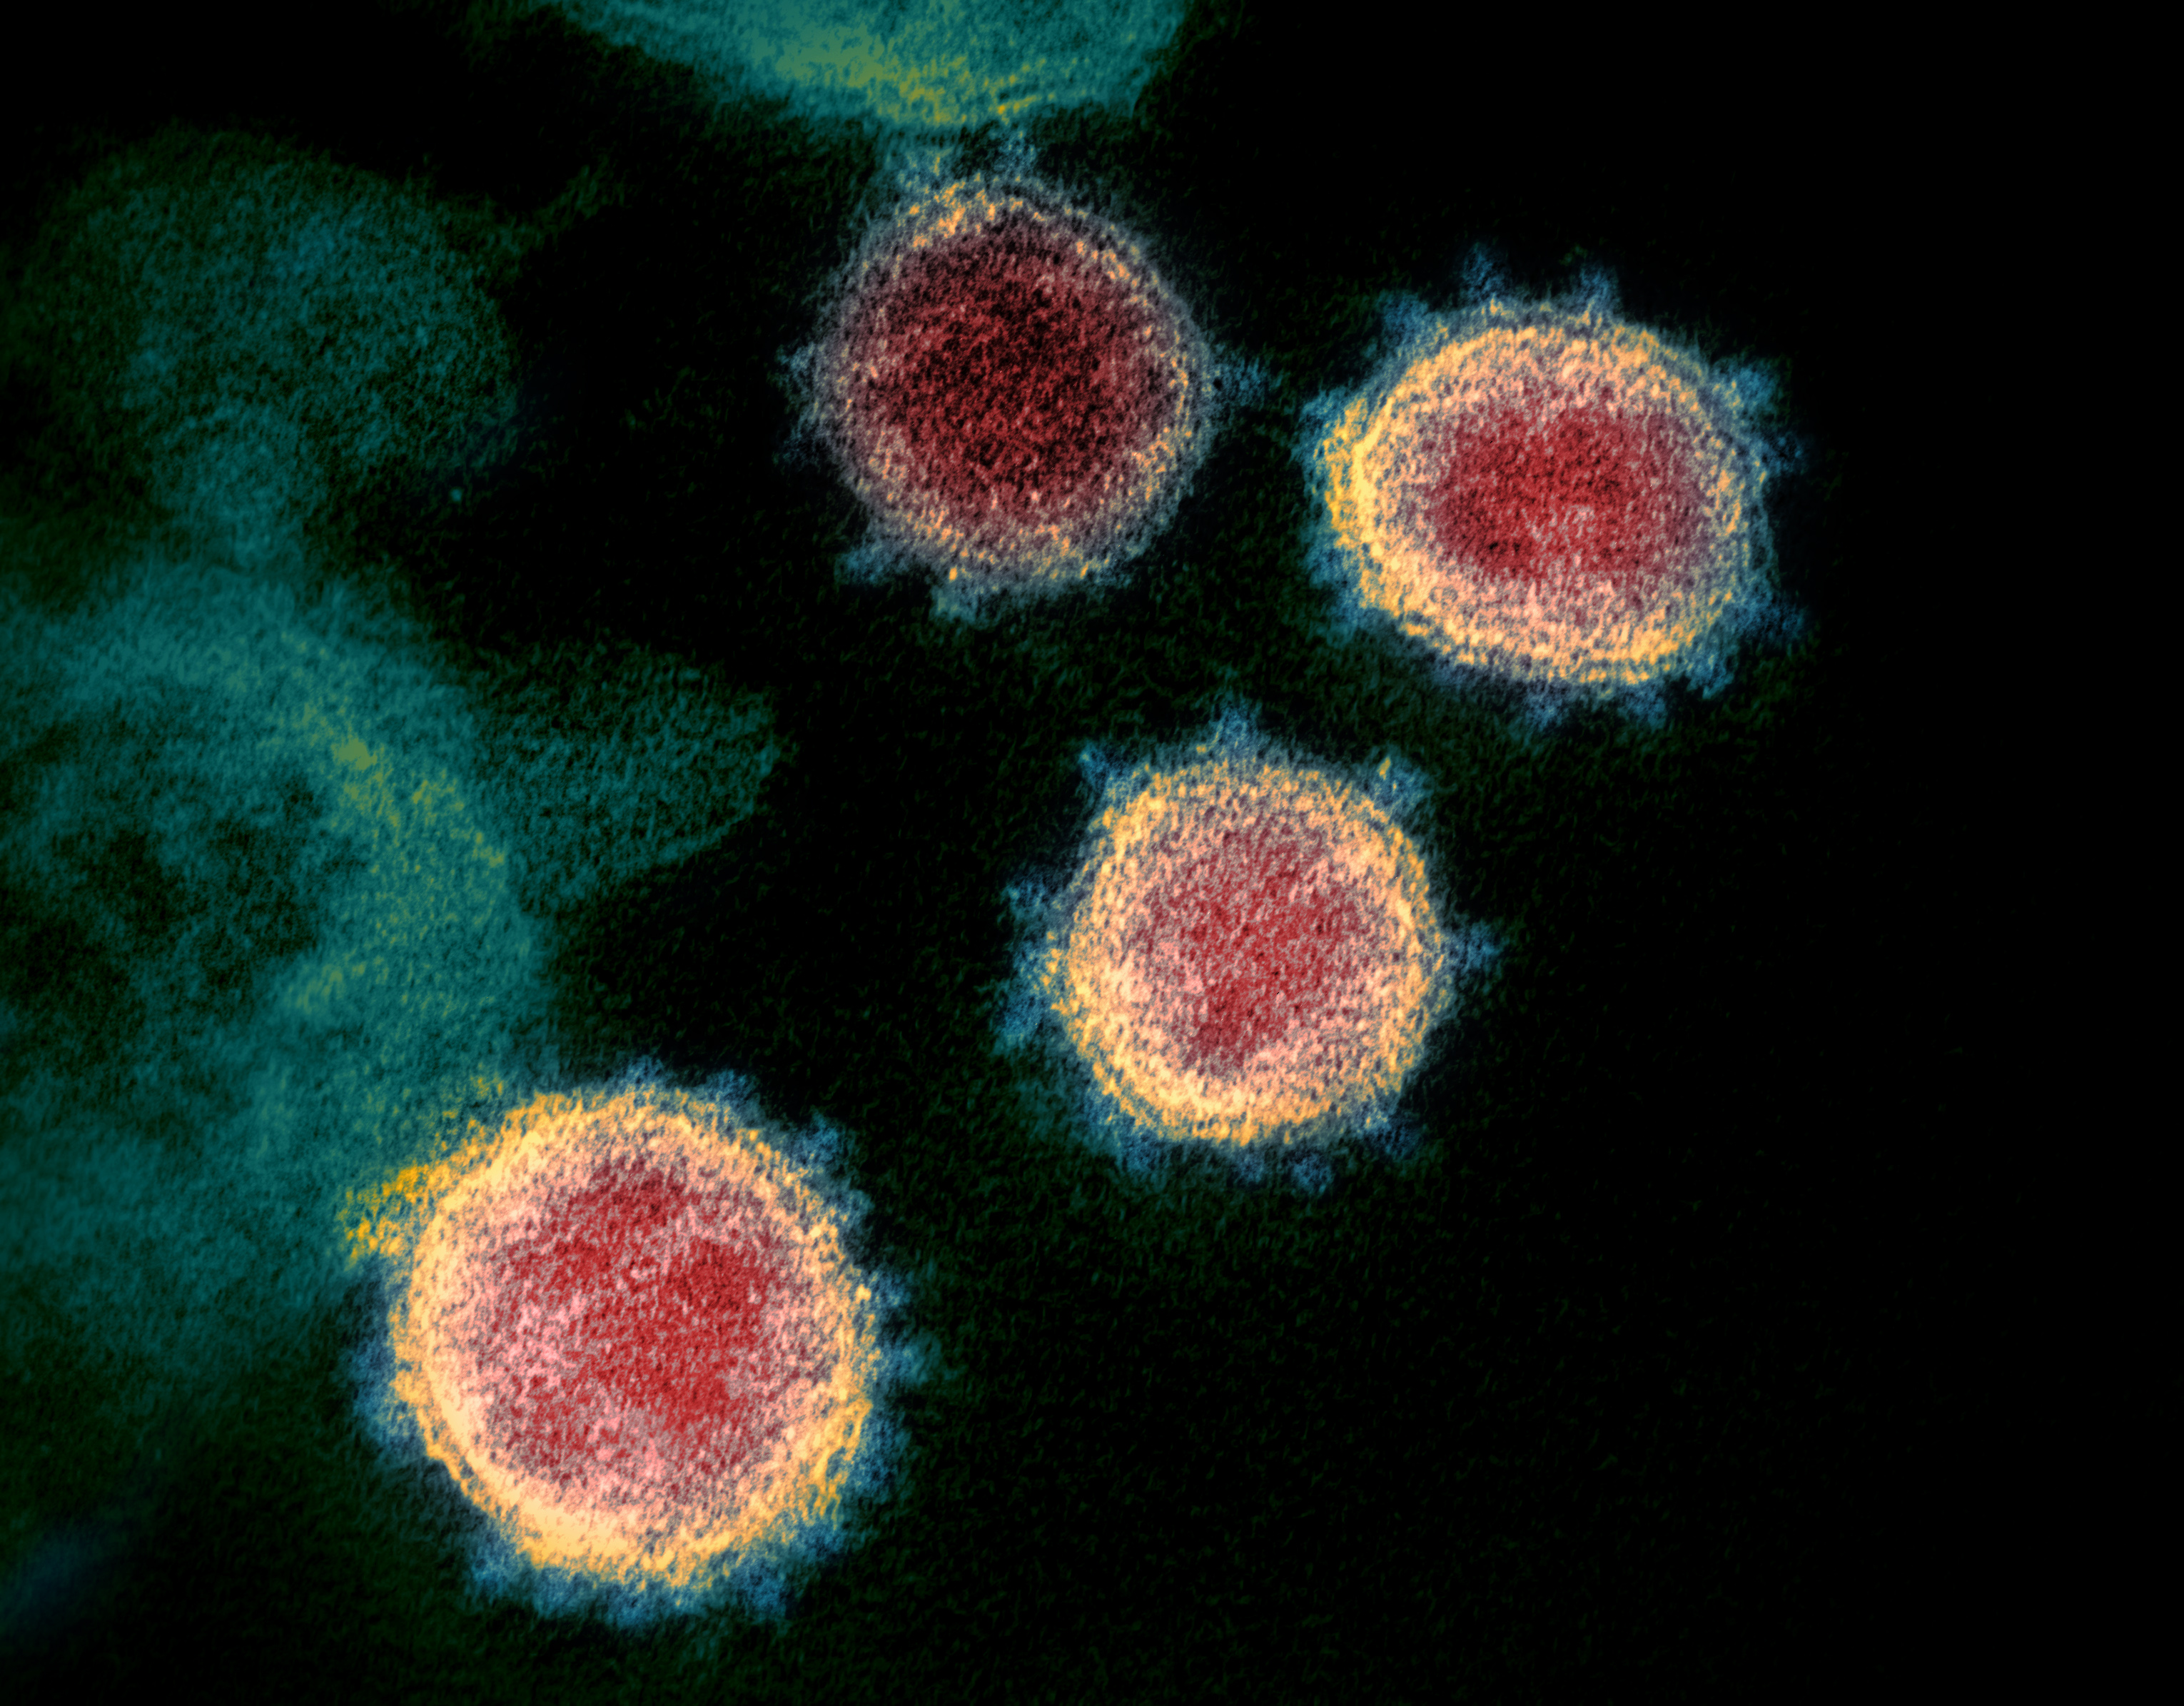 Vue microscopique du virus qui entraîne la maladie du Coronavirus